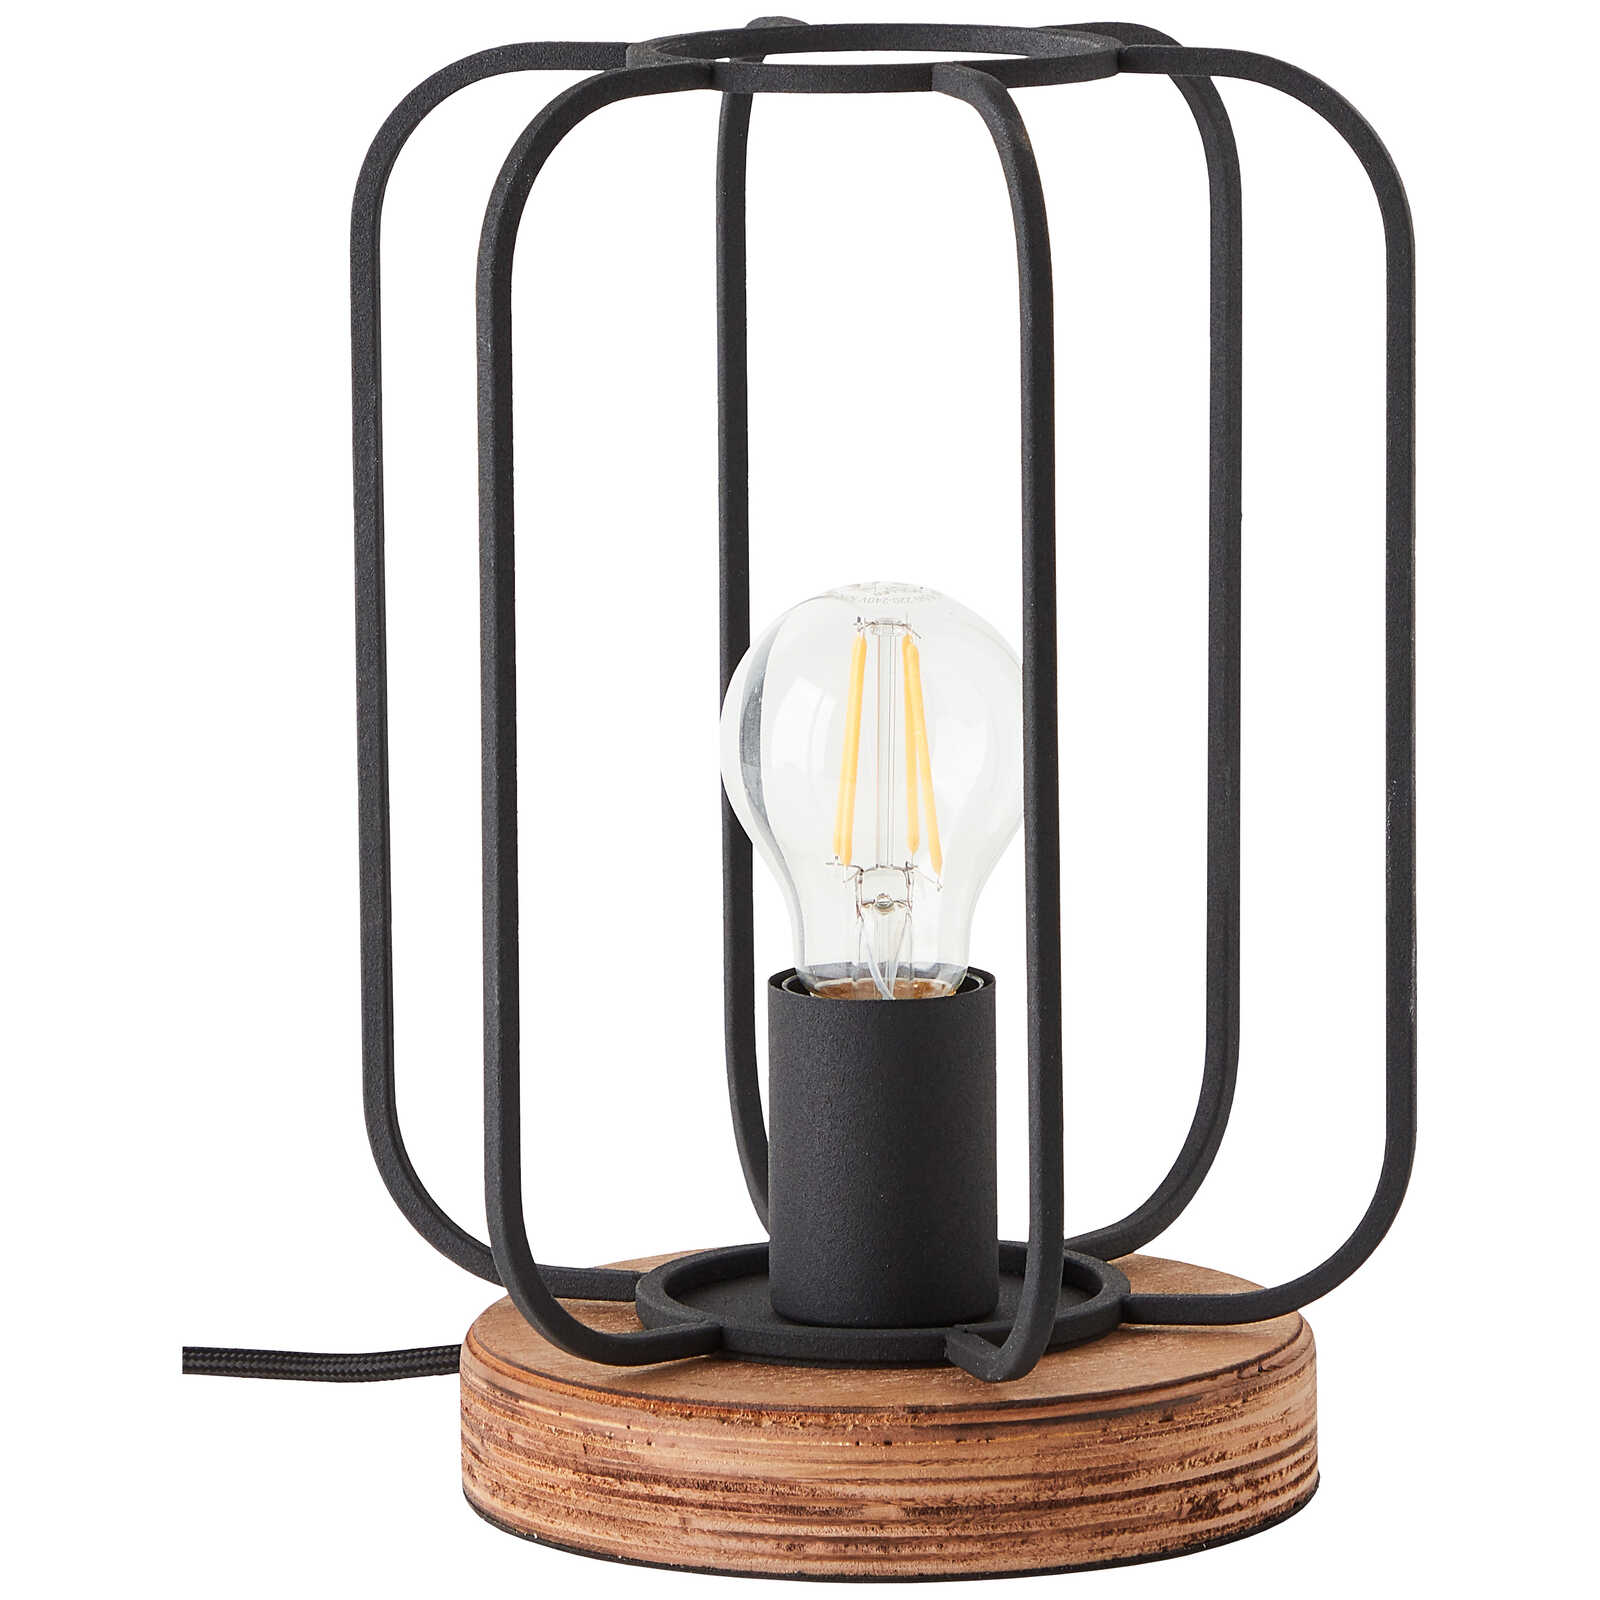             Wooden table lamp - Rosalie 2 - Brown
        